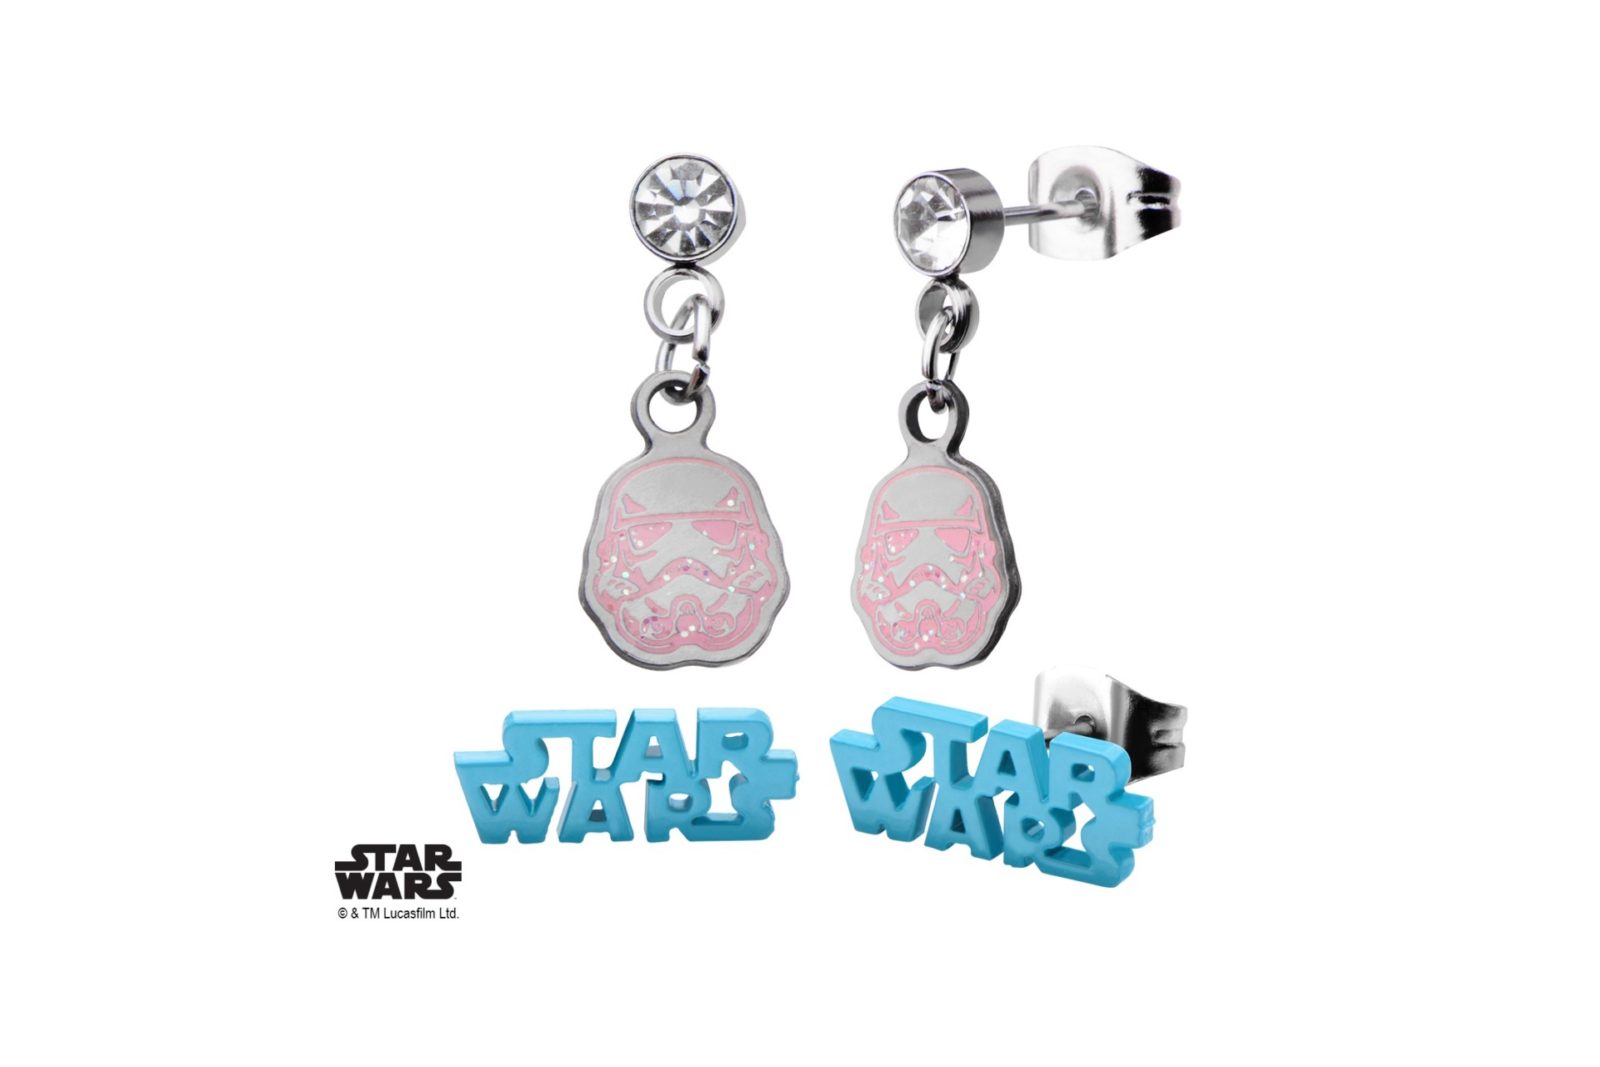 New Body Vibe x Star Wars earring set